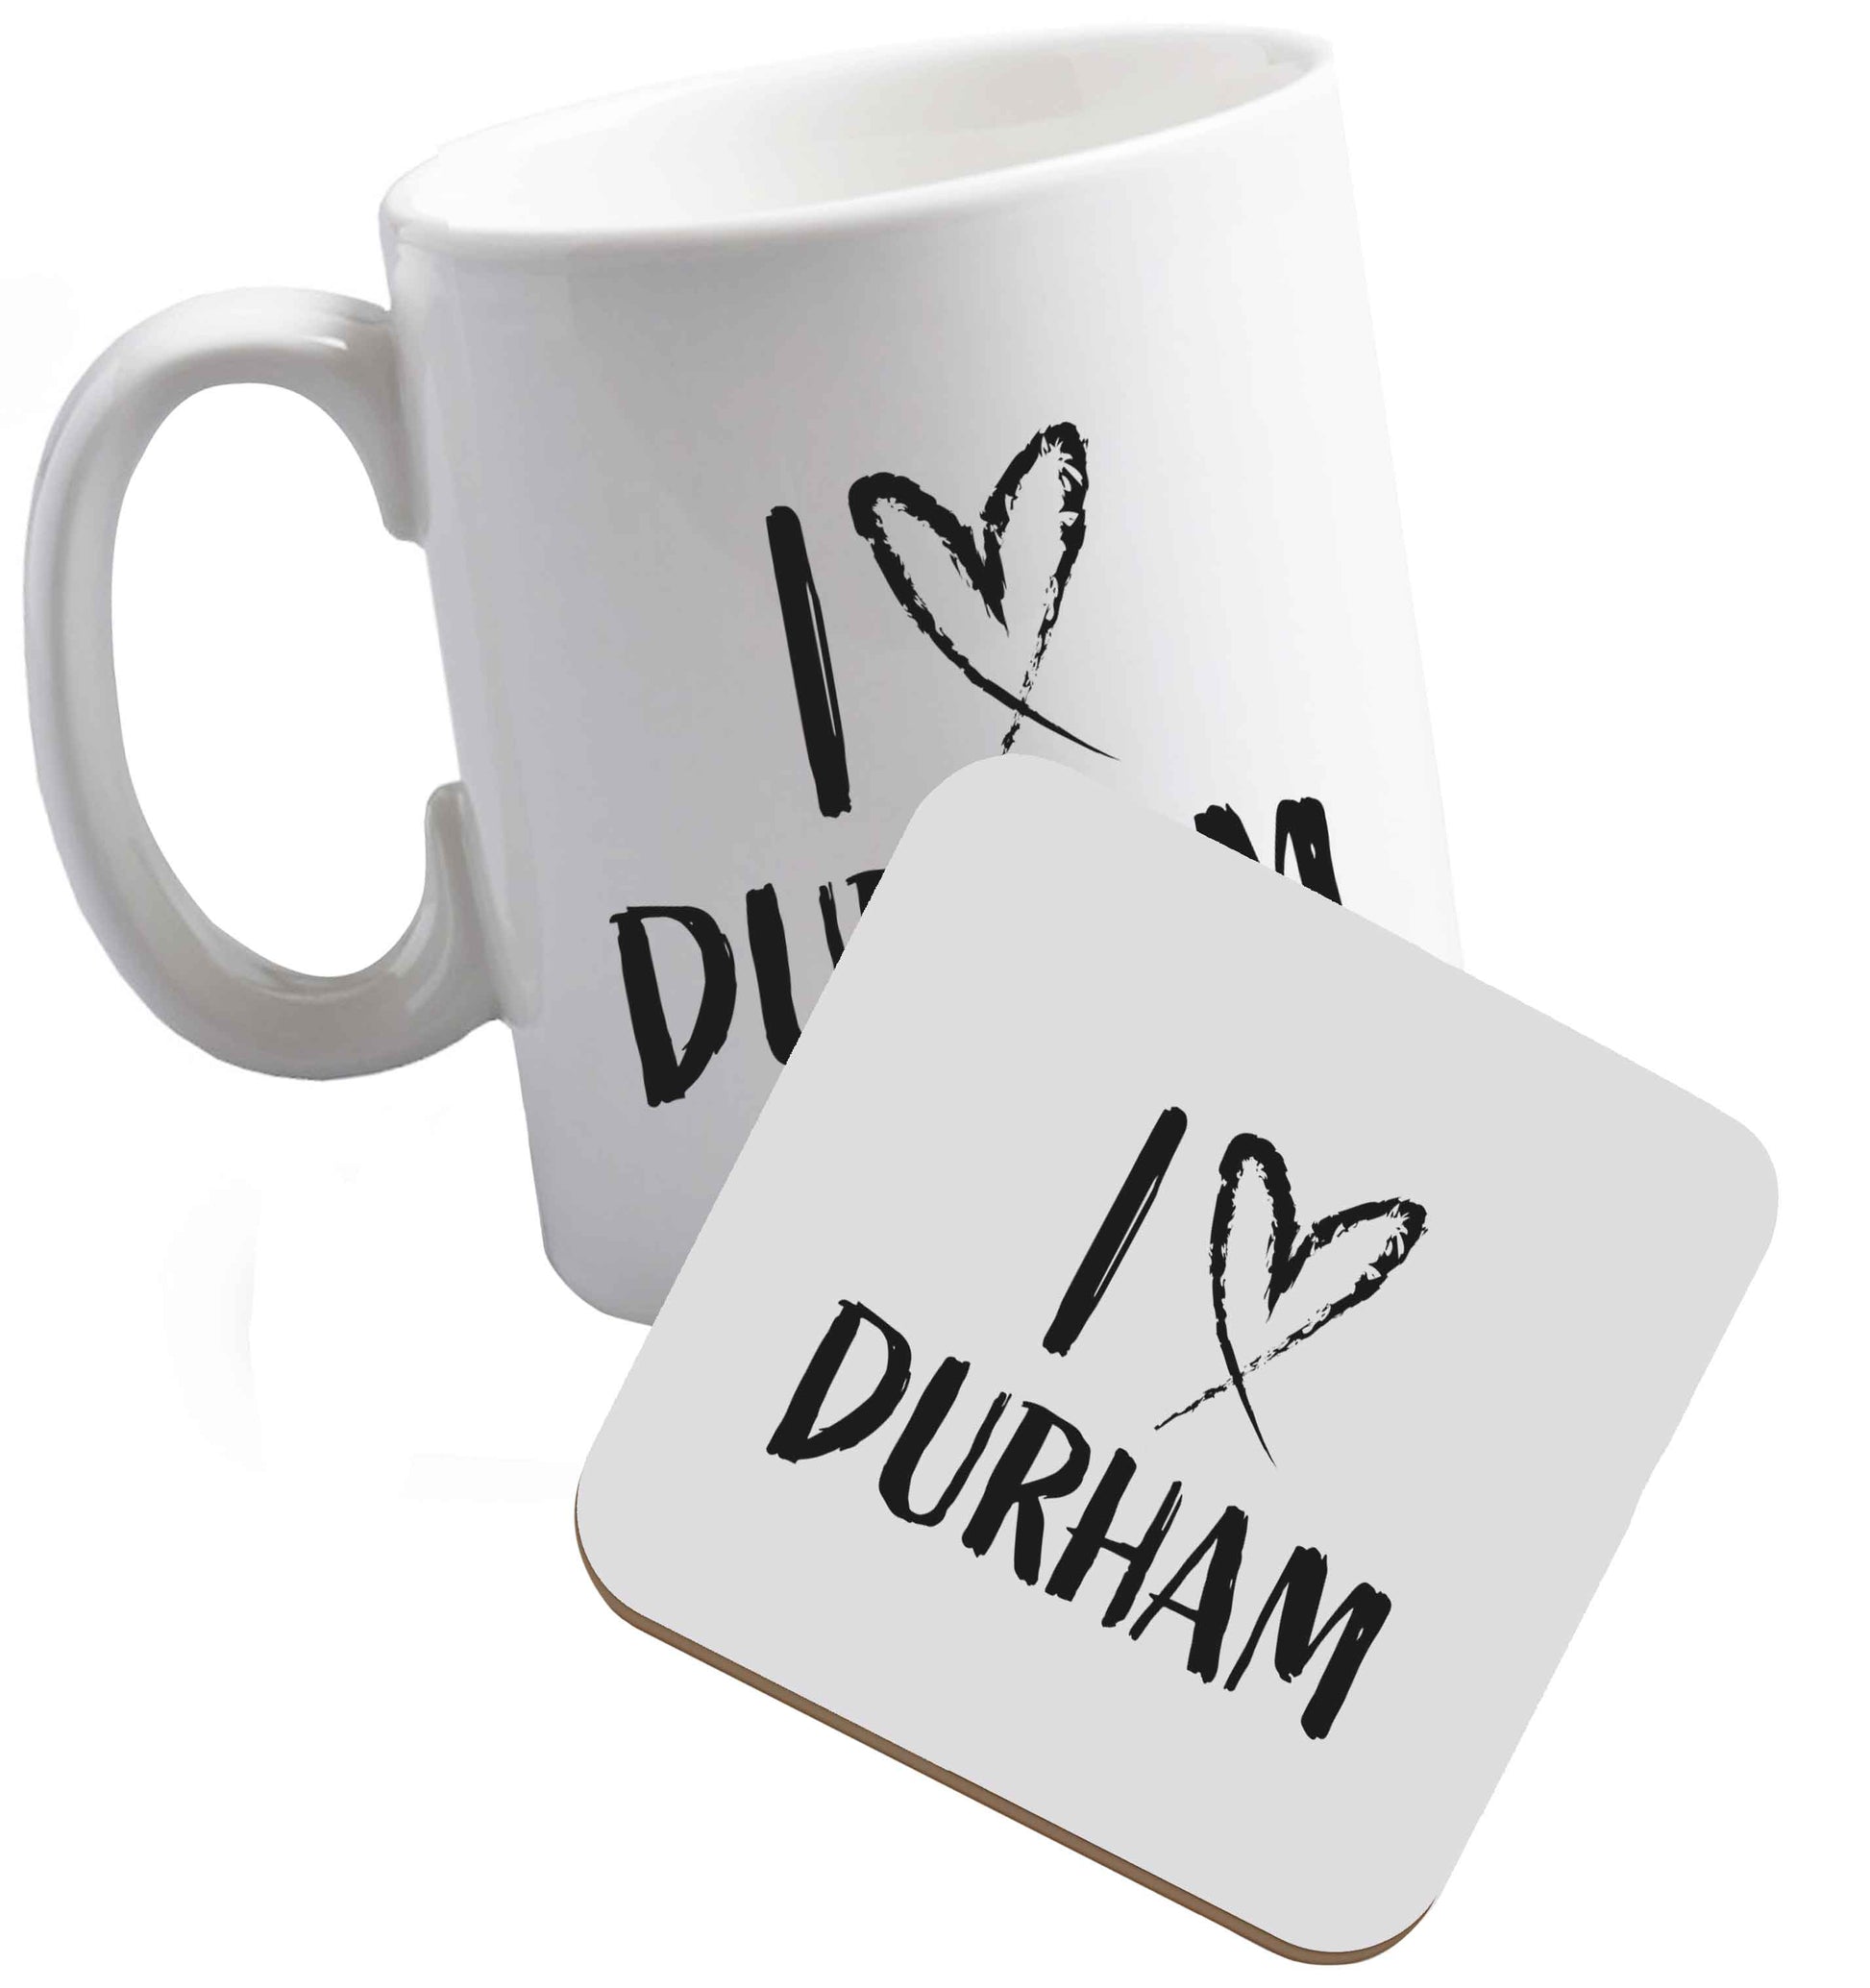 10 oz I love Durham ceramic mug and coaster set right handed